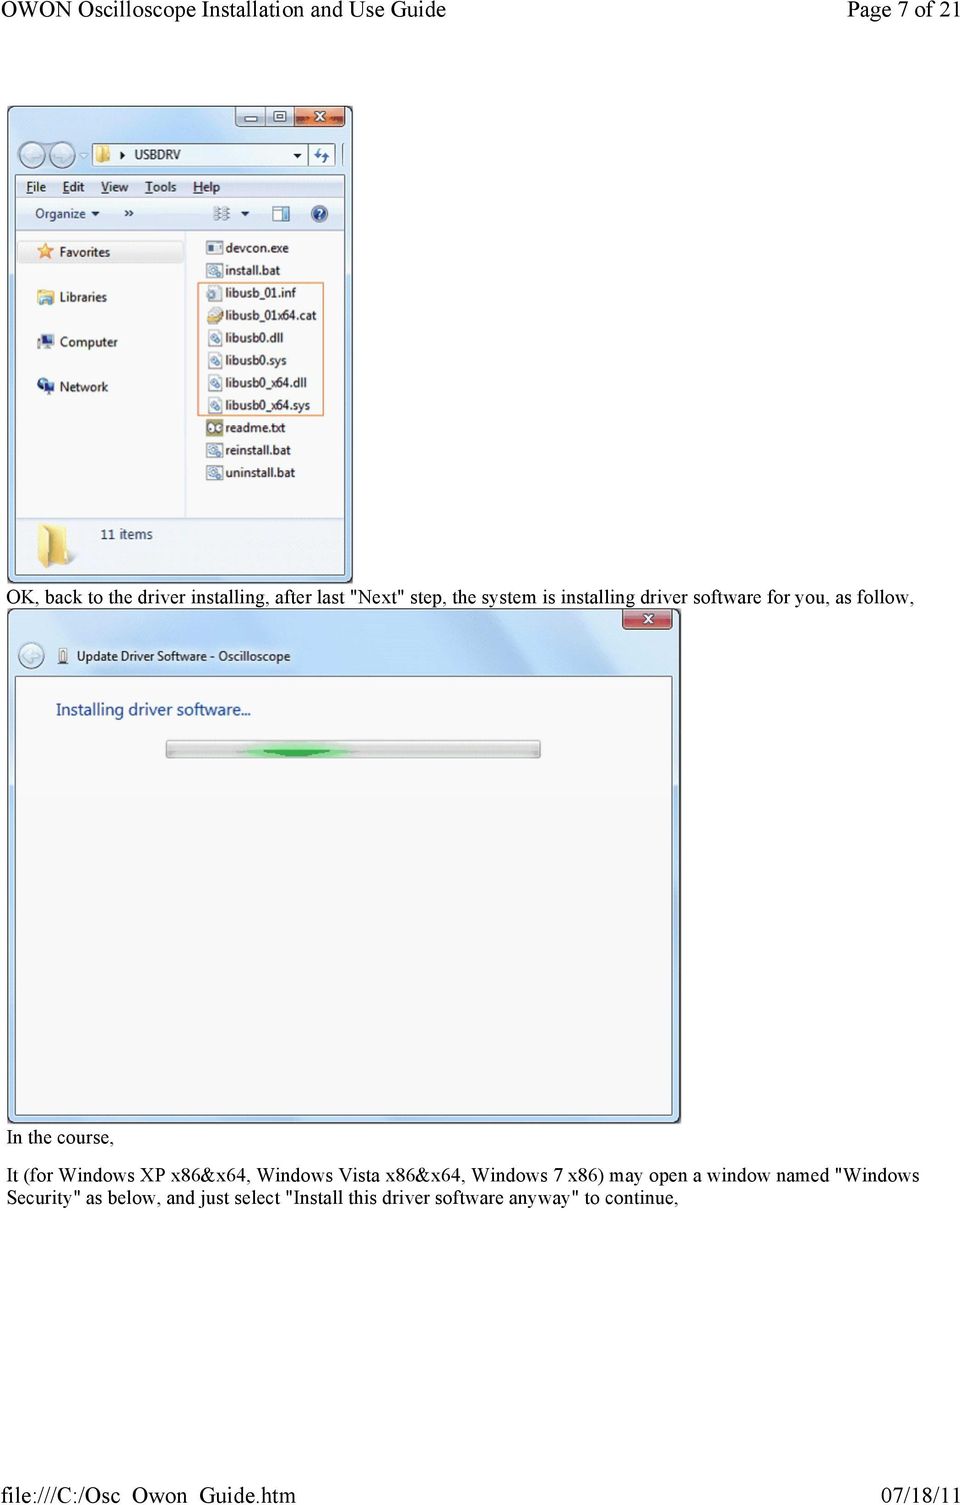 x86&x64, Windows Vista x86&x64, Windows 7 x86) may open a window named "Windows